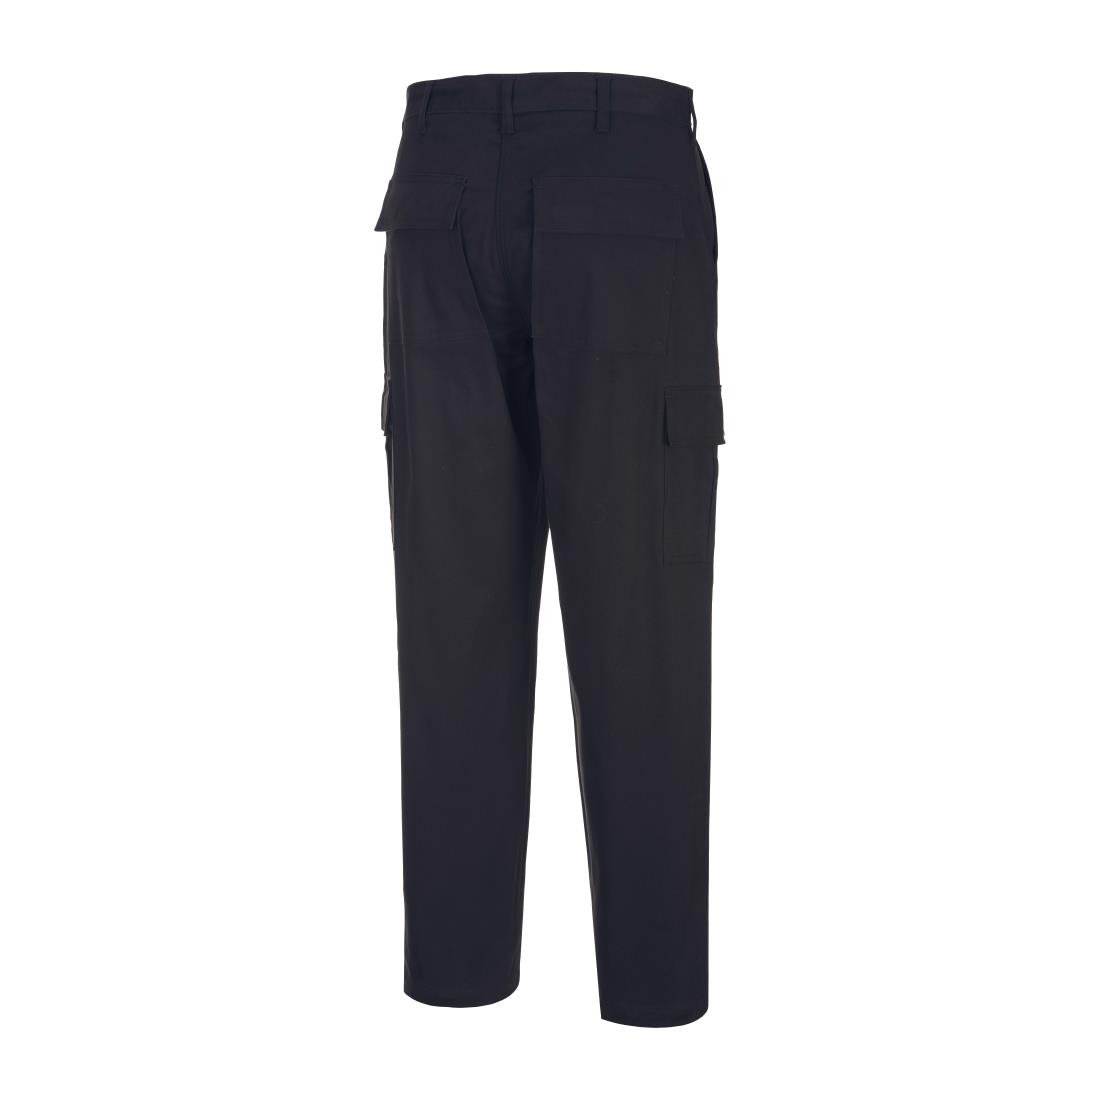 BA088-12 Portwest Eco Women's Stretch Cargo Trousers Black Size 12